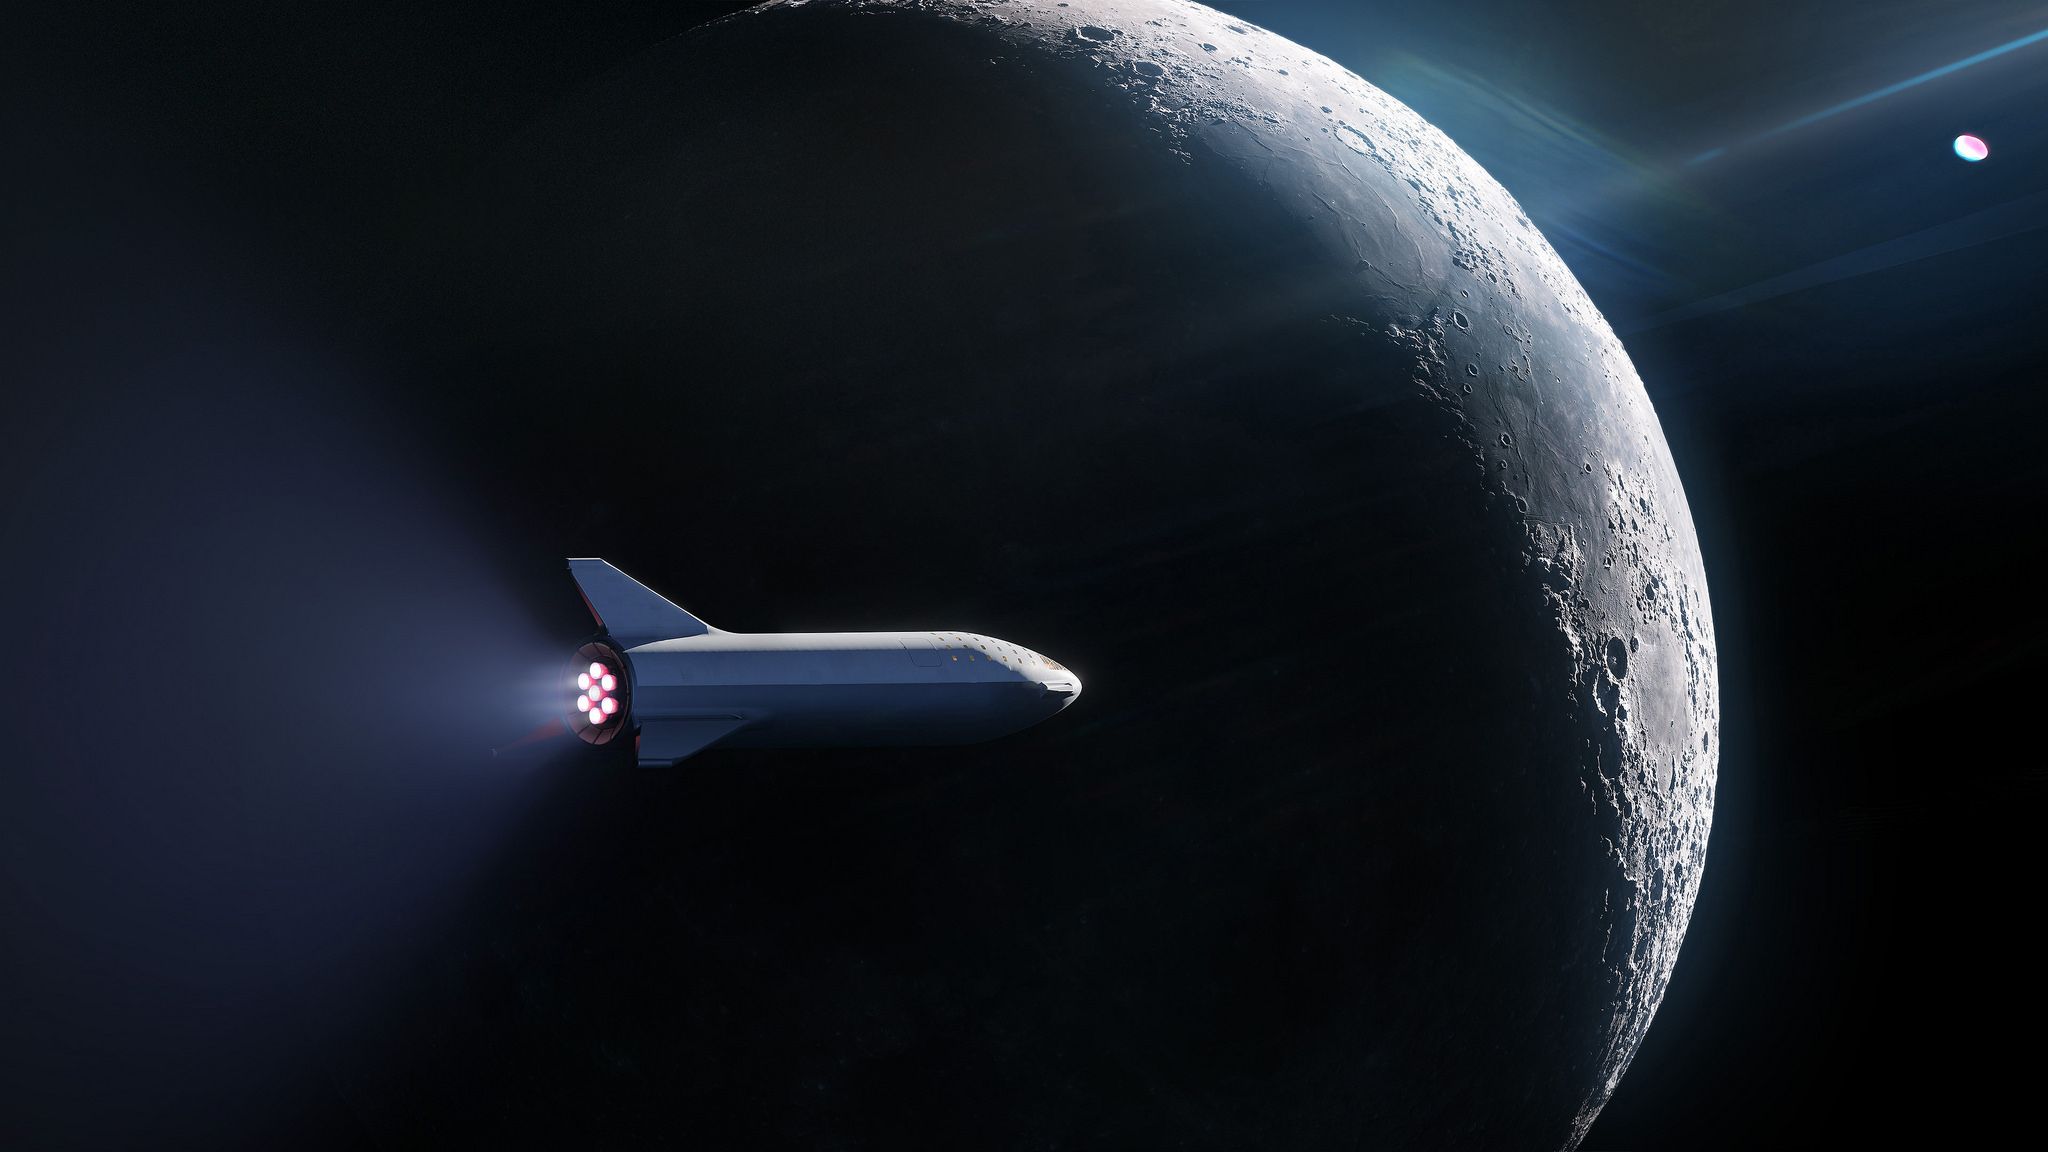 SpaceX may begin testing its Starship spacecraft this week